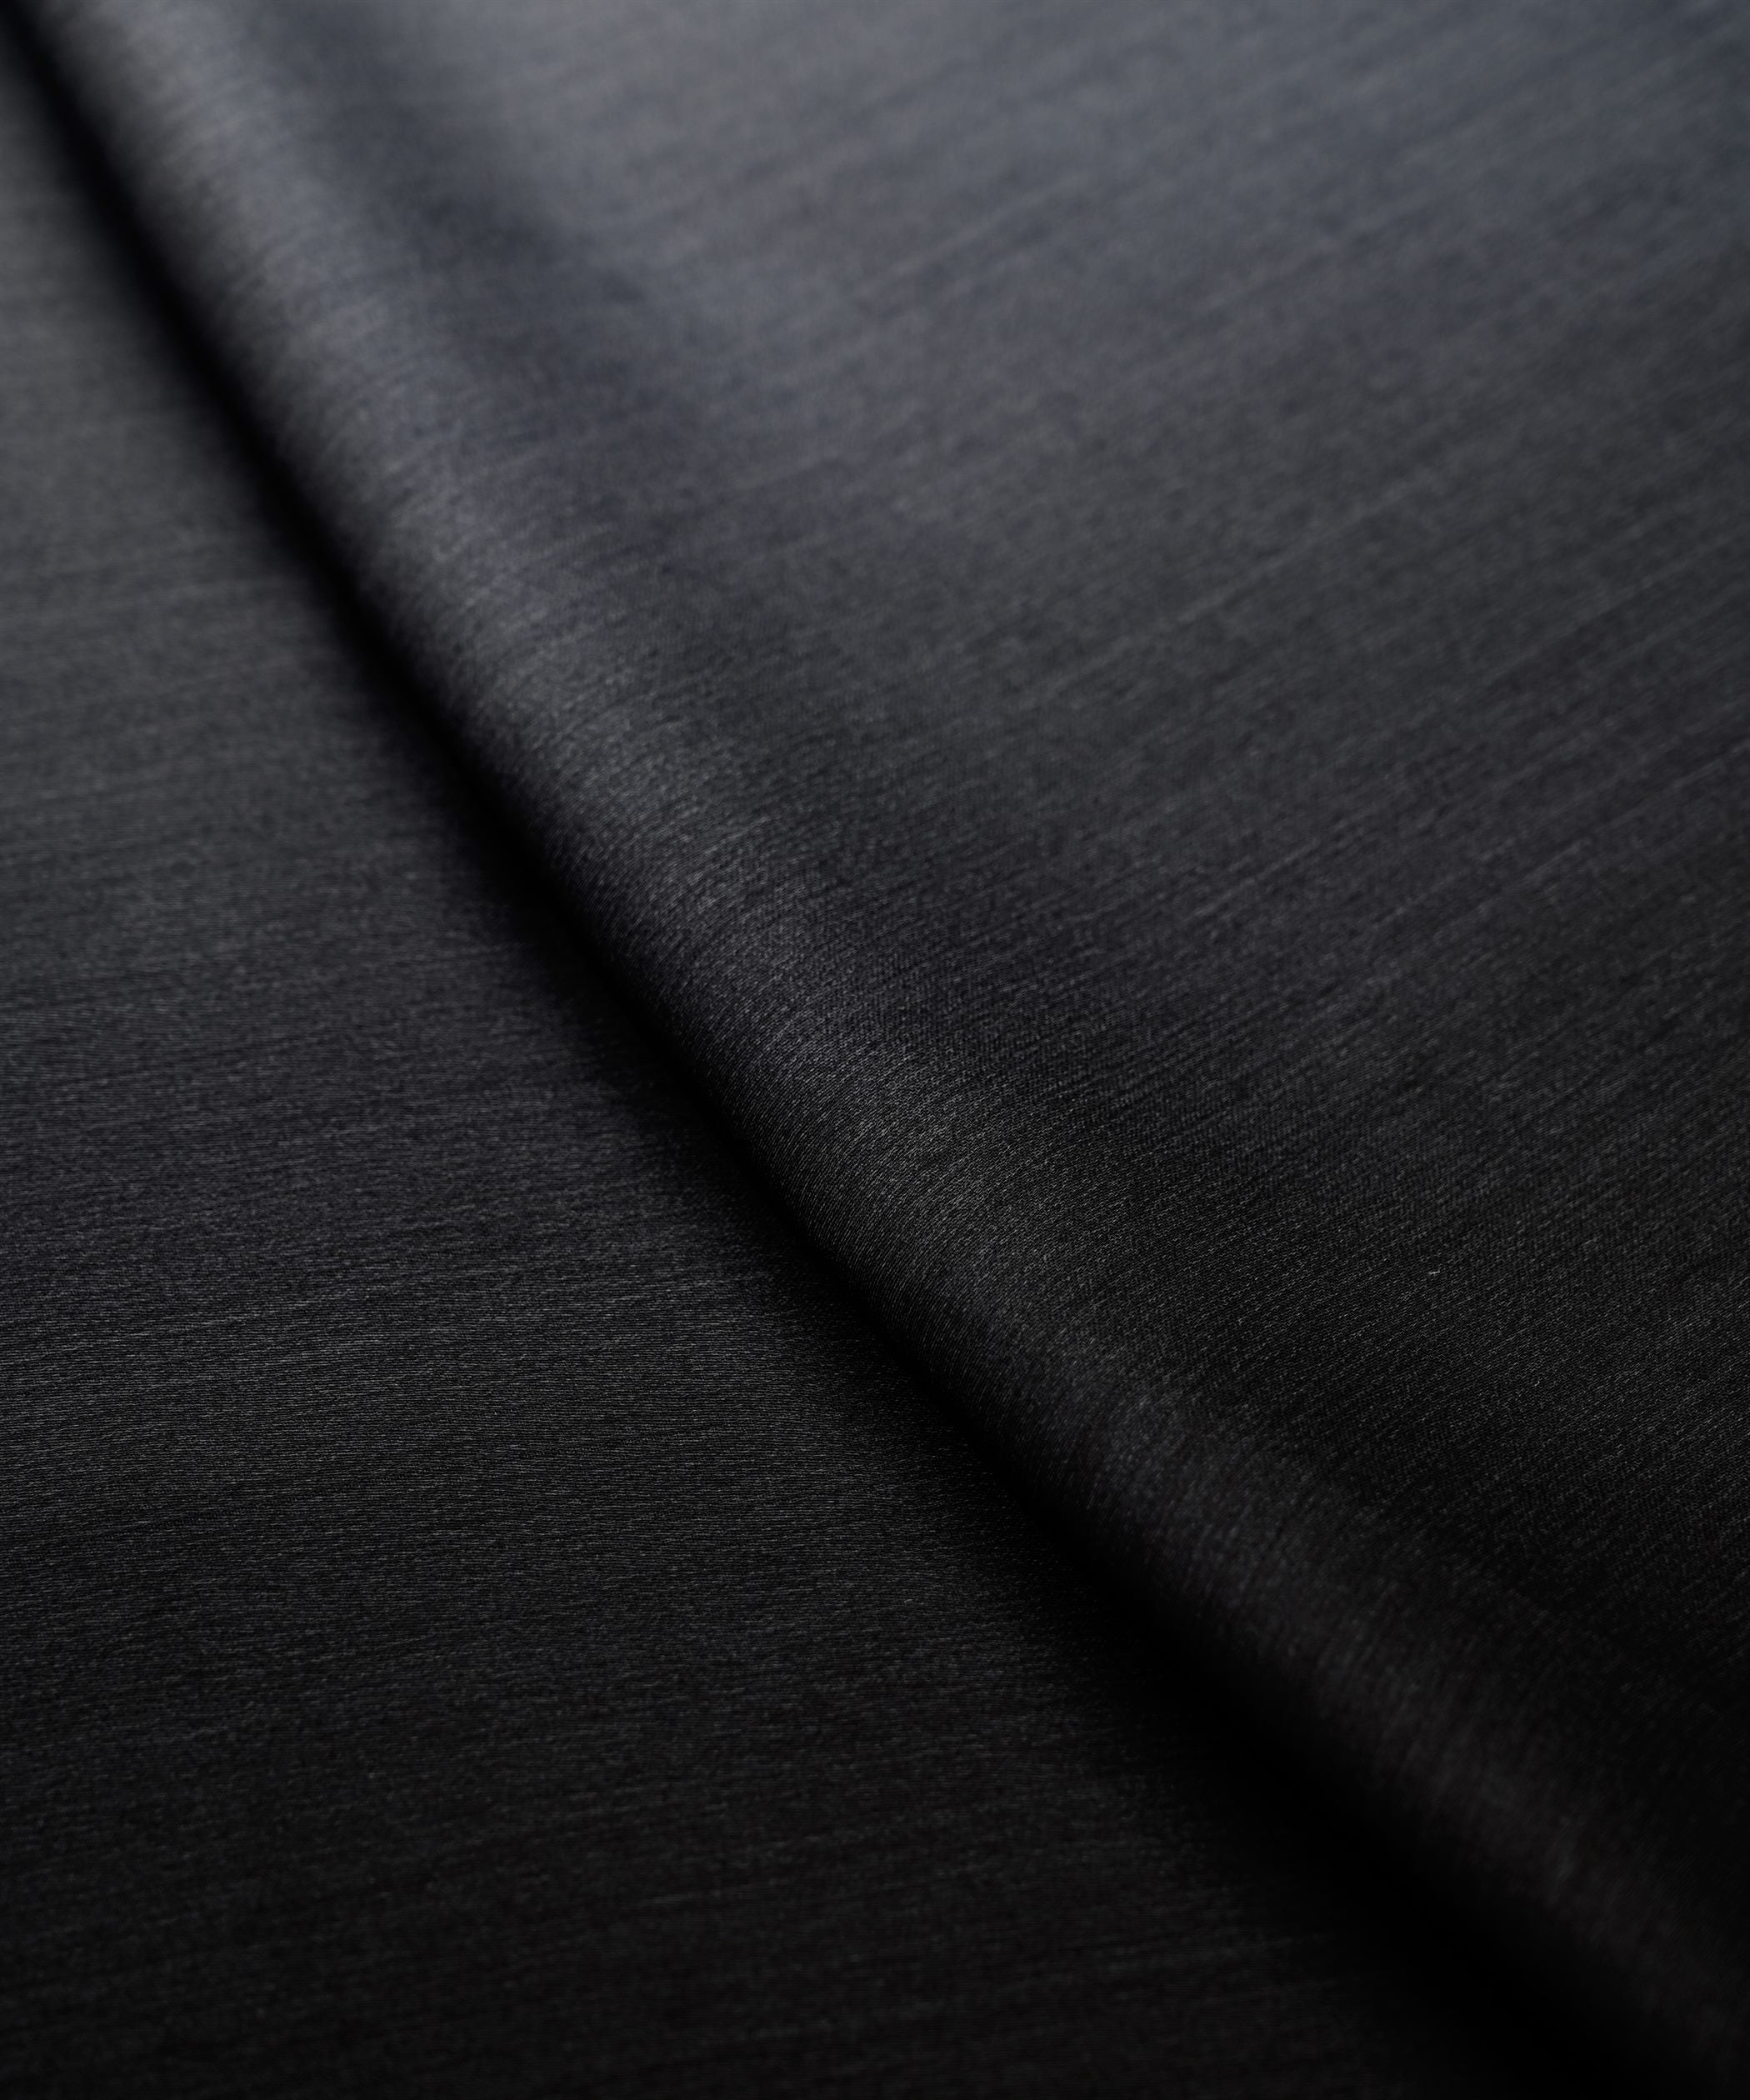 Black Plain Dyed Shaded Satin Chiffon Fabric